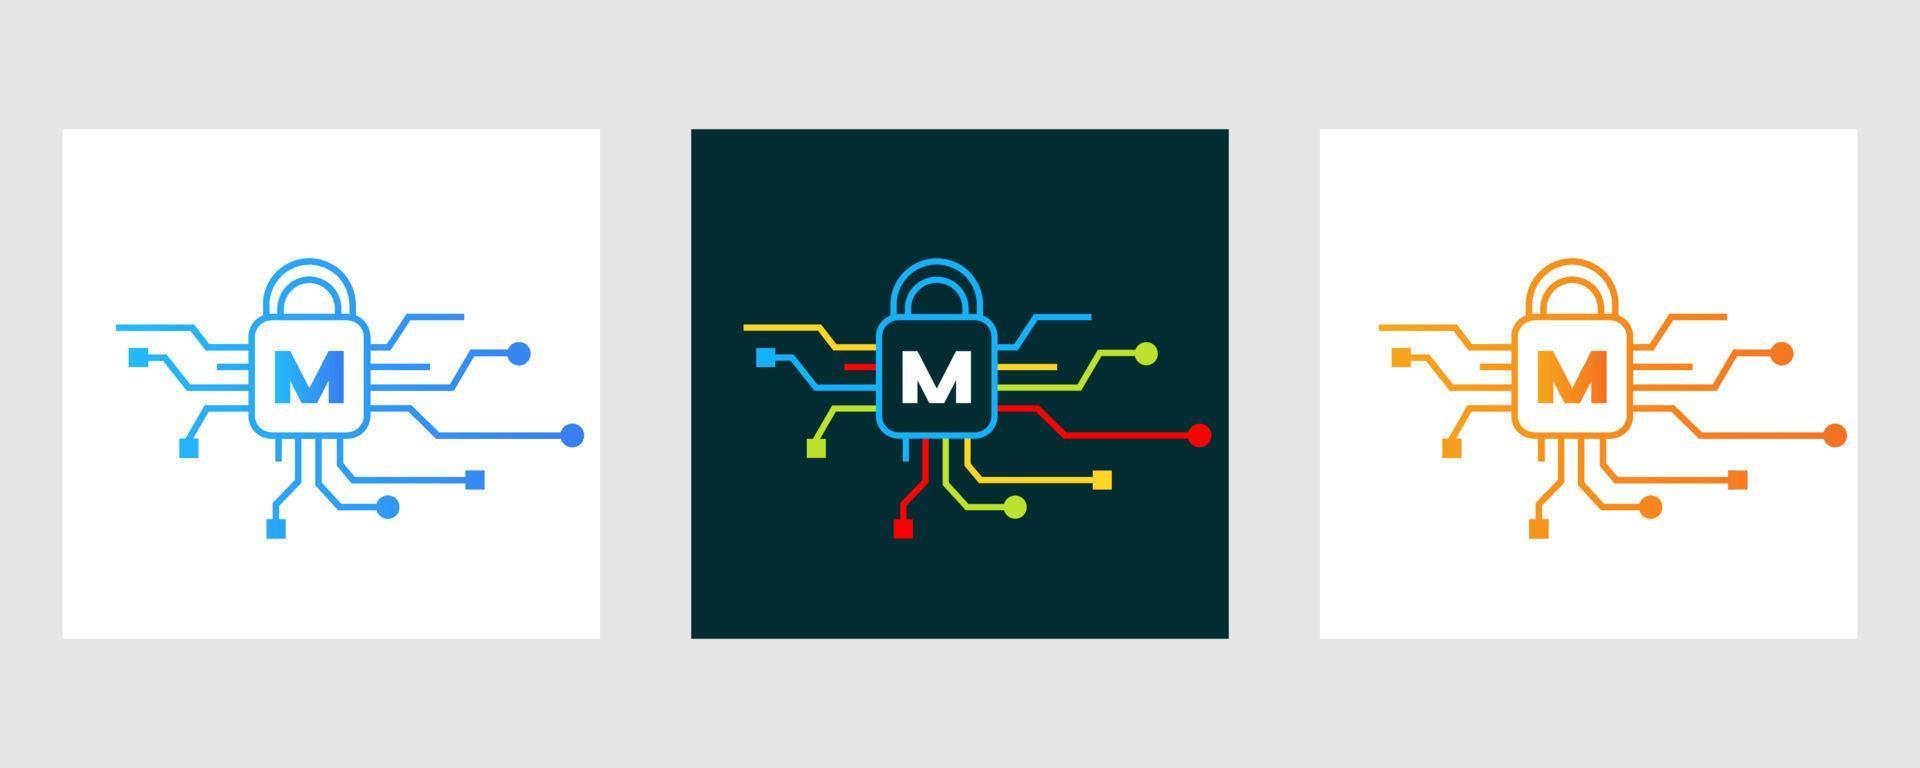 brief m cyber veiligheid logo. internet veiligheid teken, cyber bescherming, technologie, biotechnologie symbool vector